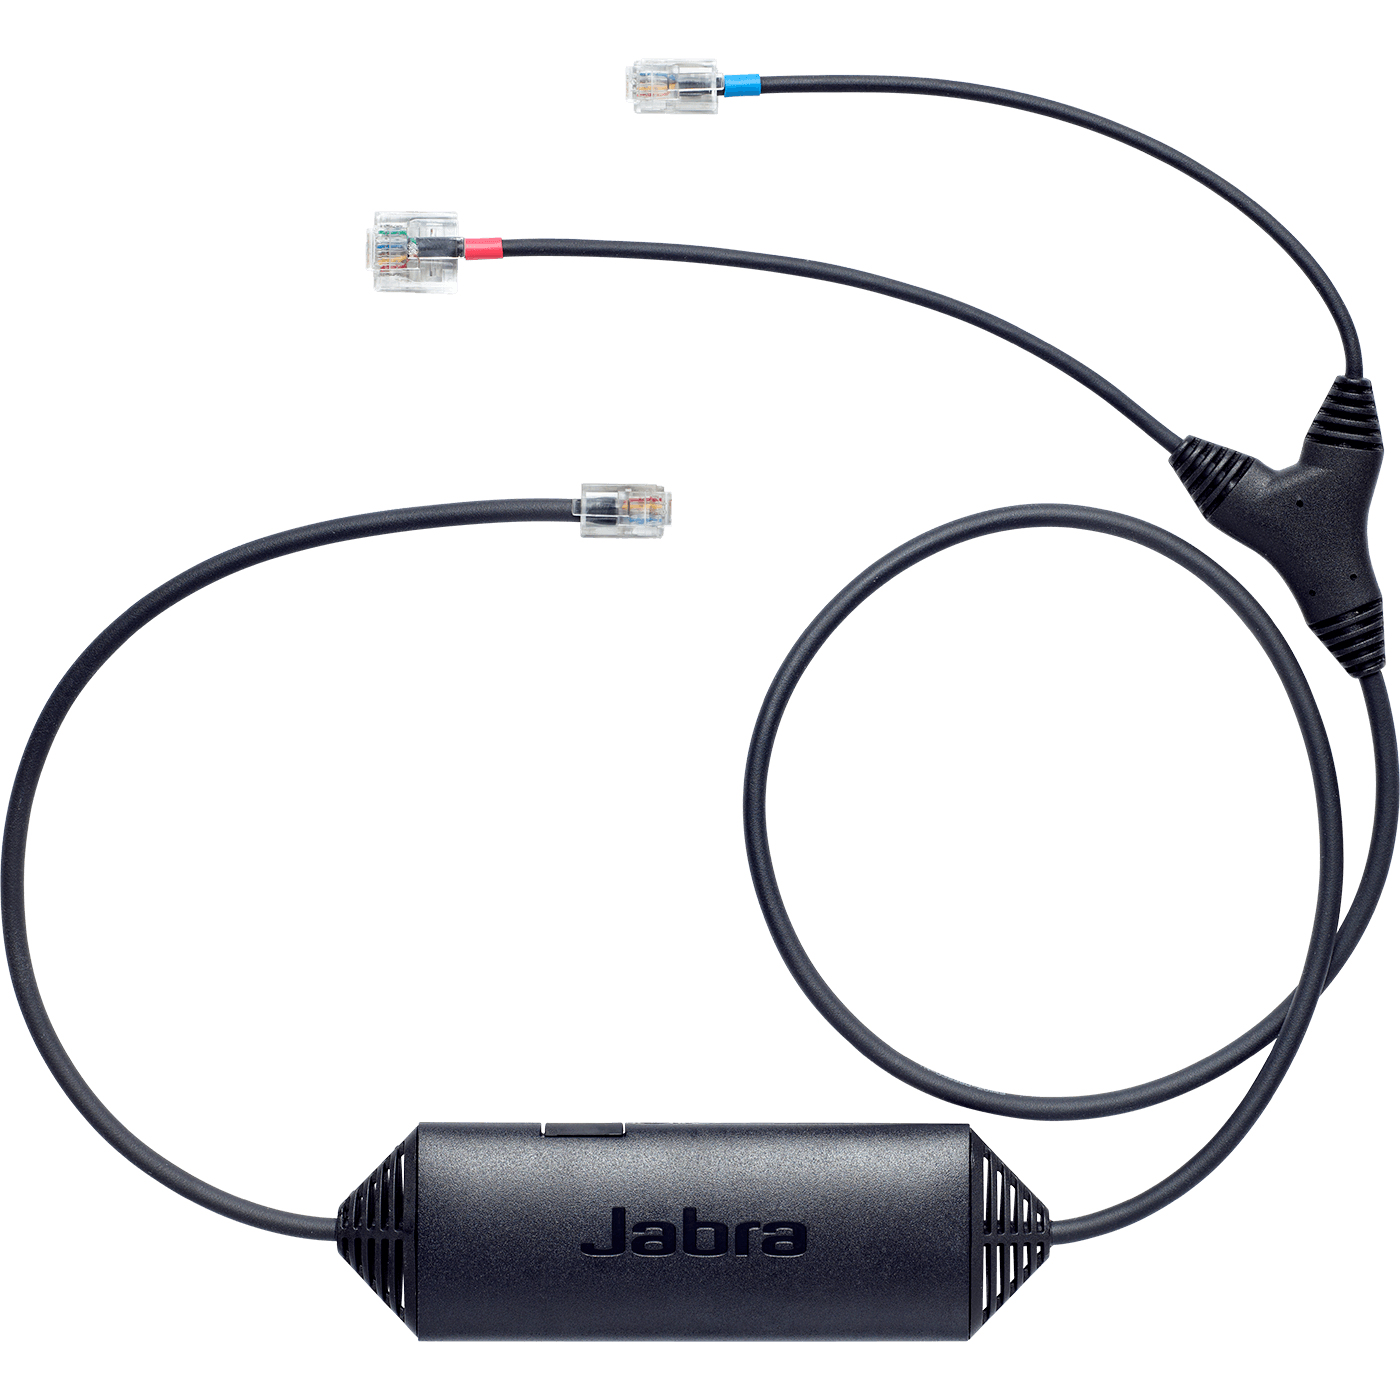 Jabra 14201-33 tilbehør til hovedtelefon/headset EHS-adapter, 0 in distributor/wholesale for resellers to sell - Stock In The Channel